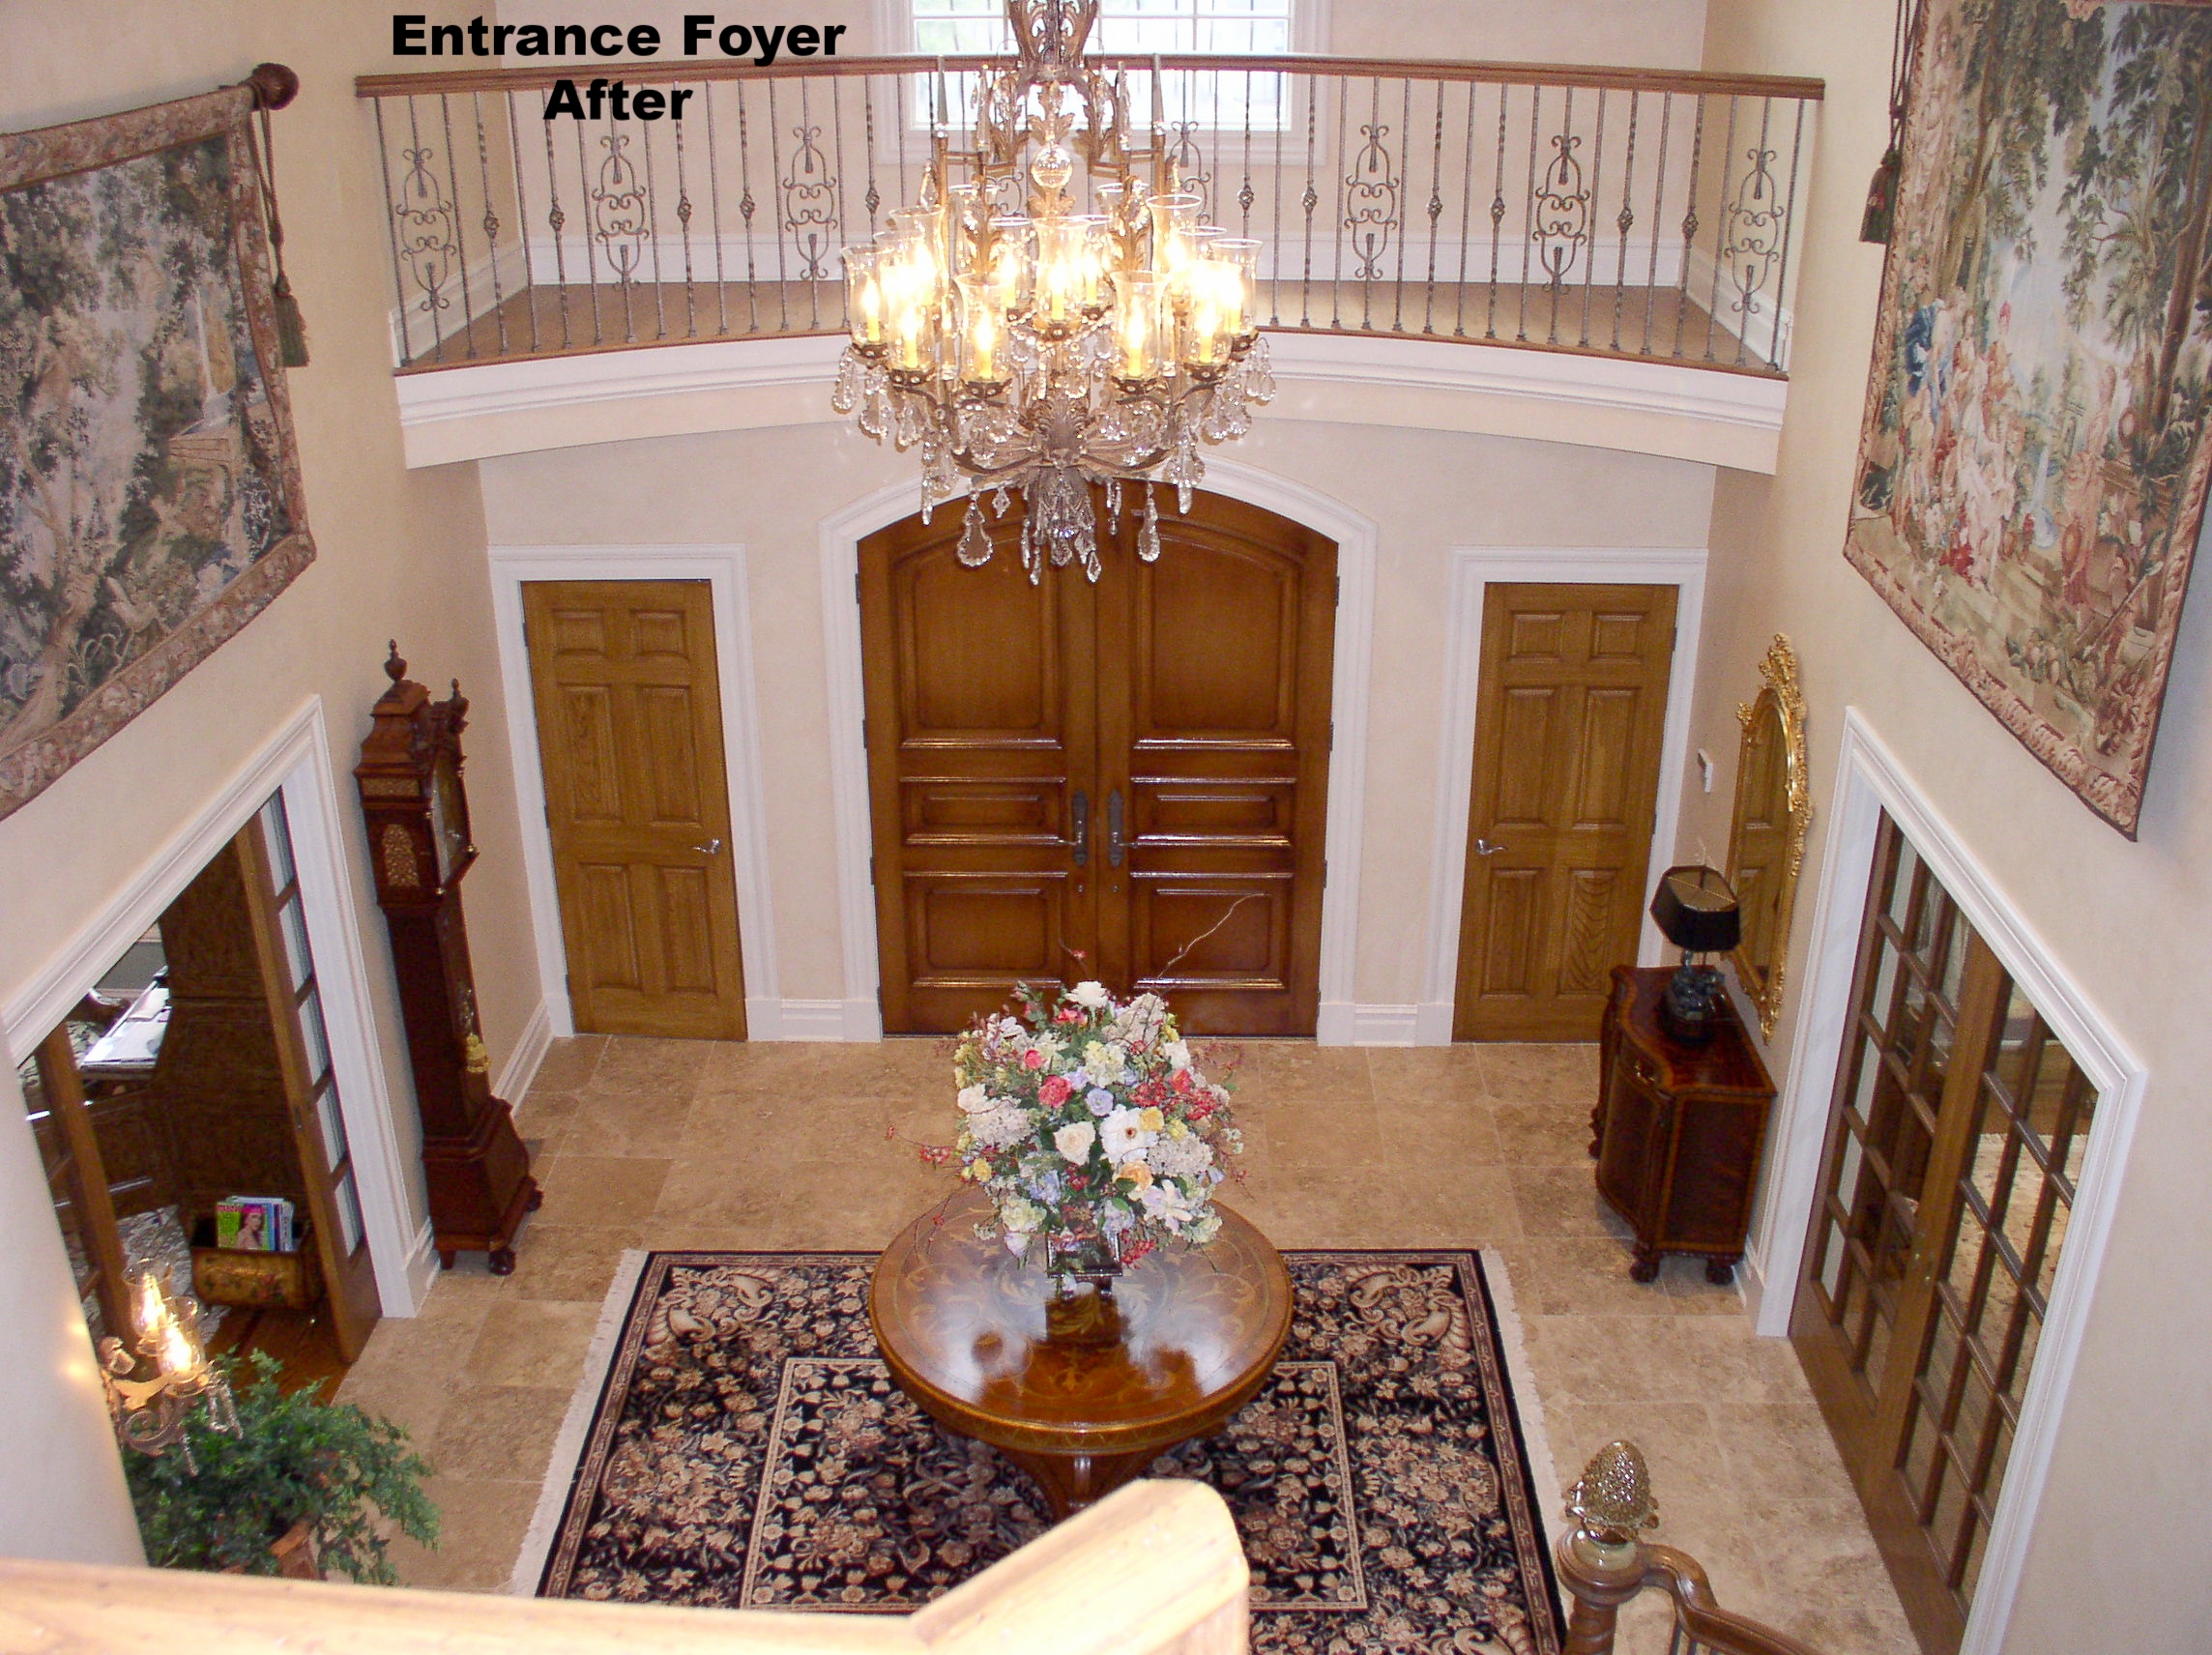 Entrance Foyer After 